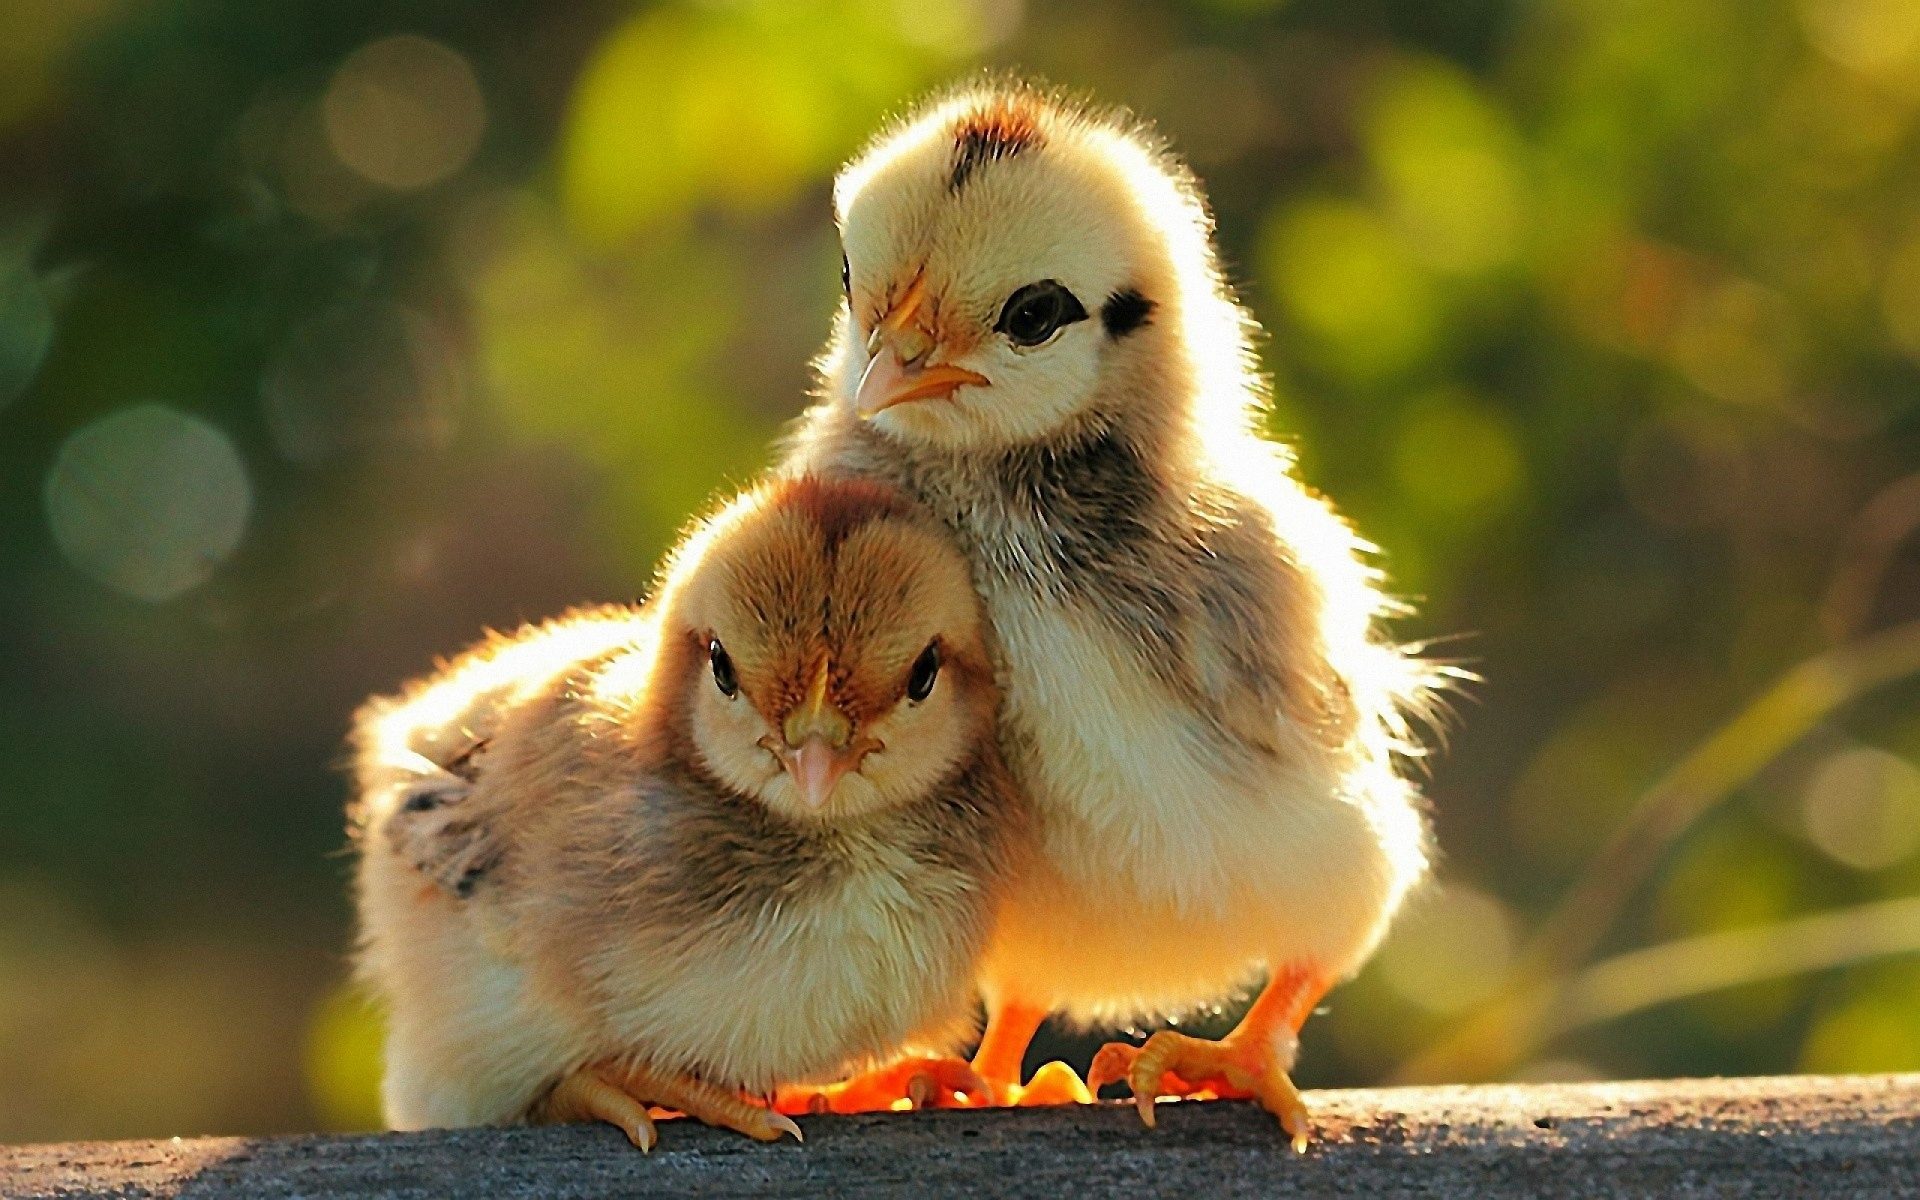 Baby chickens photo